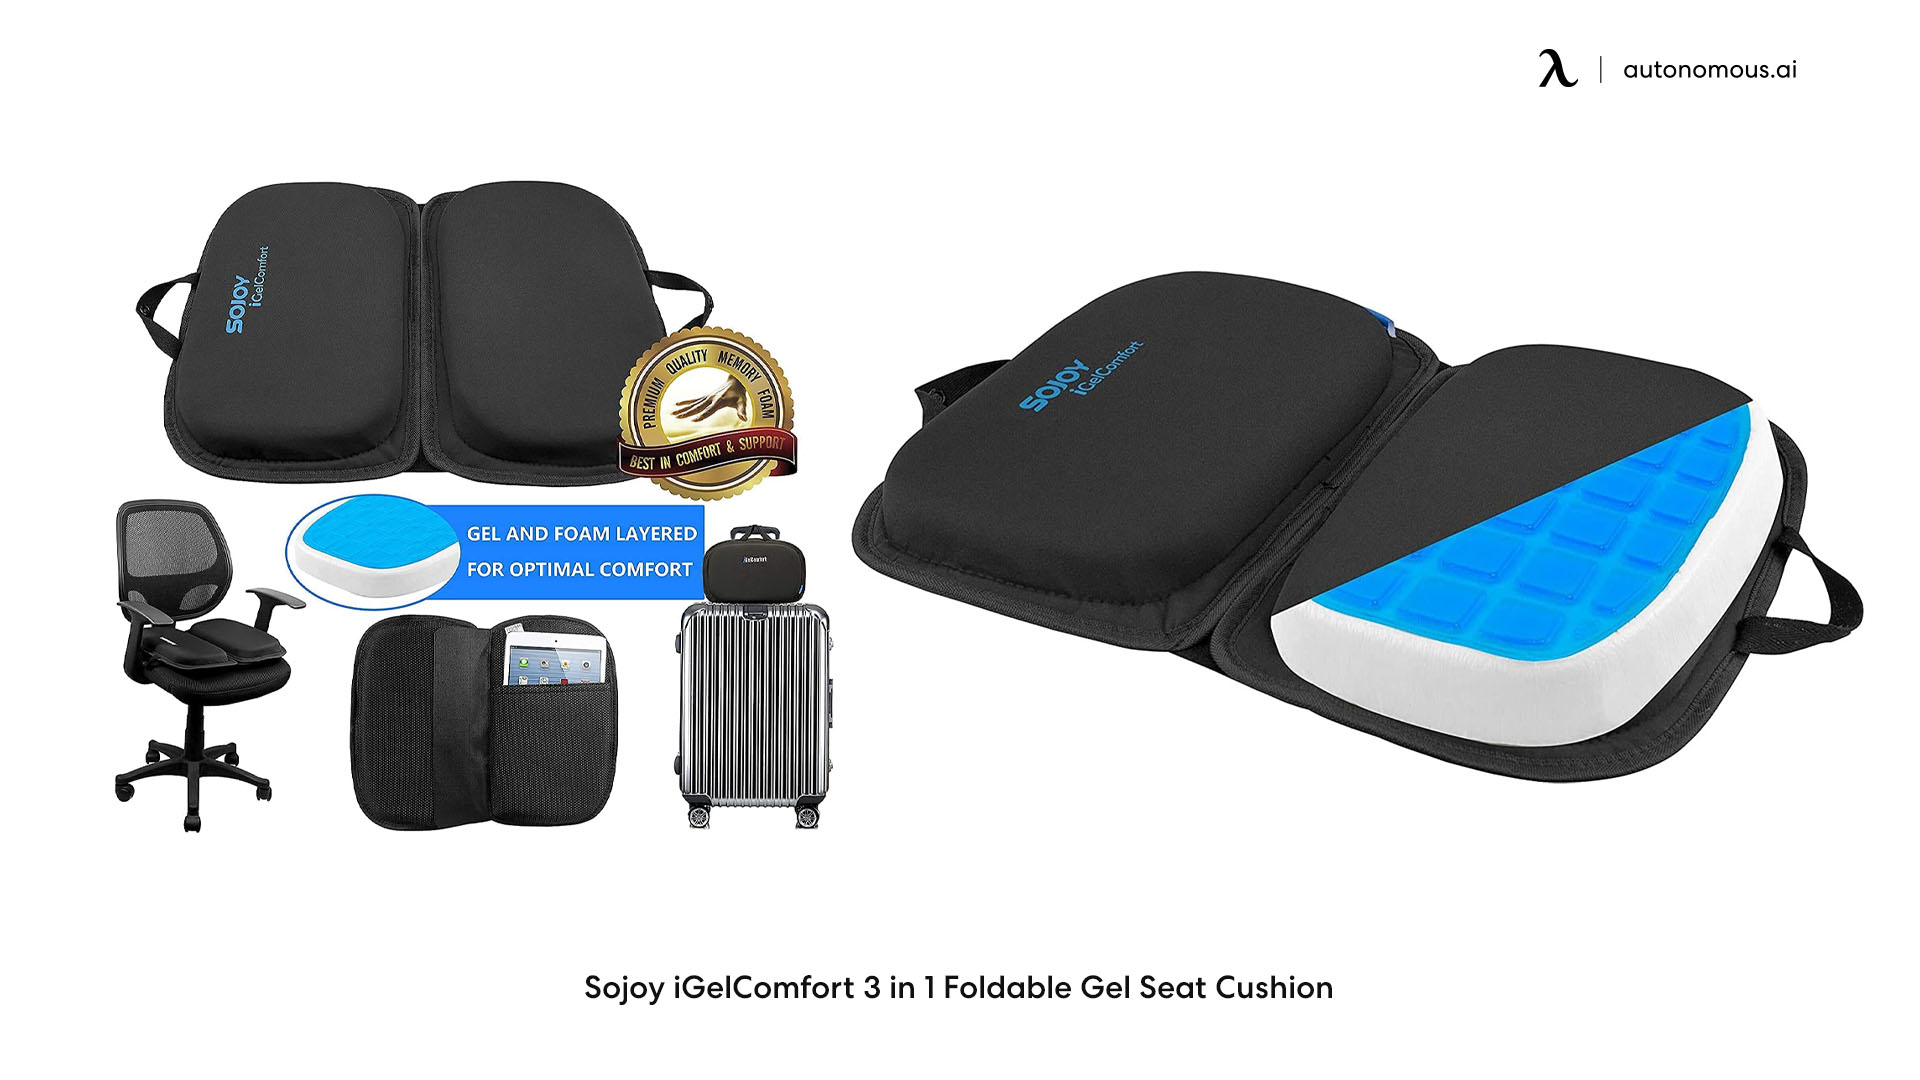 Sojoy iGelComfort 3 in 1 Foldable Gel Seat Cushion